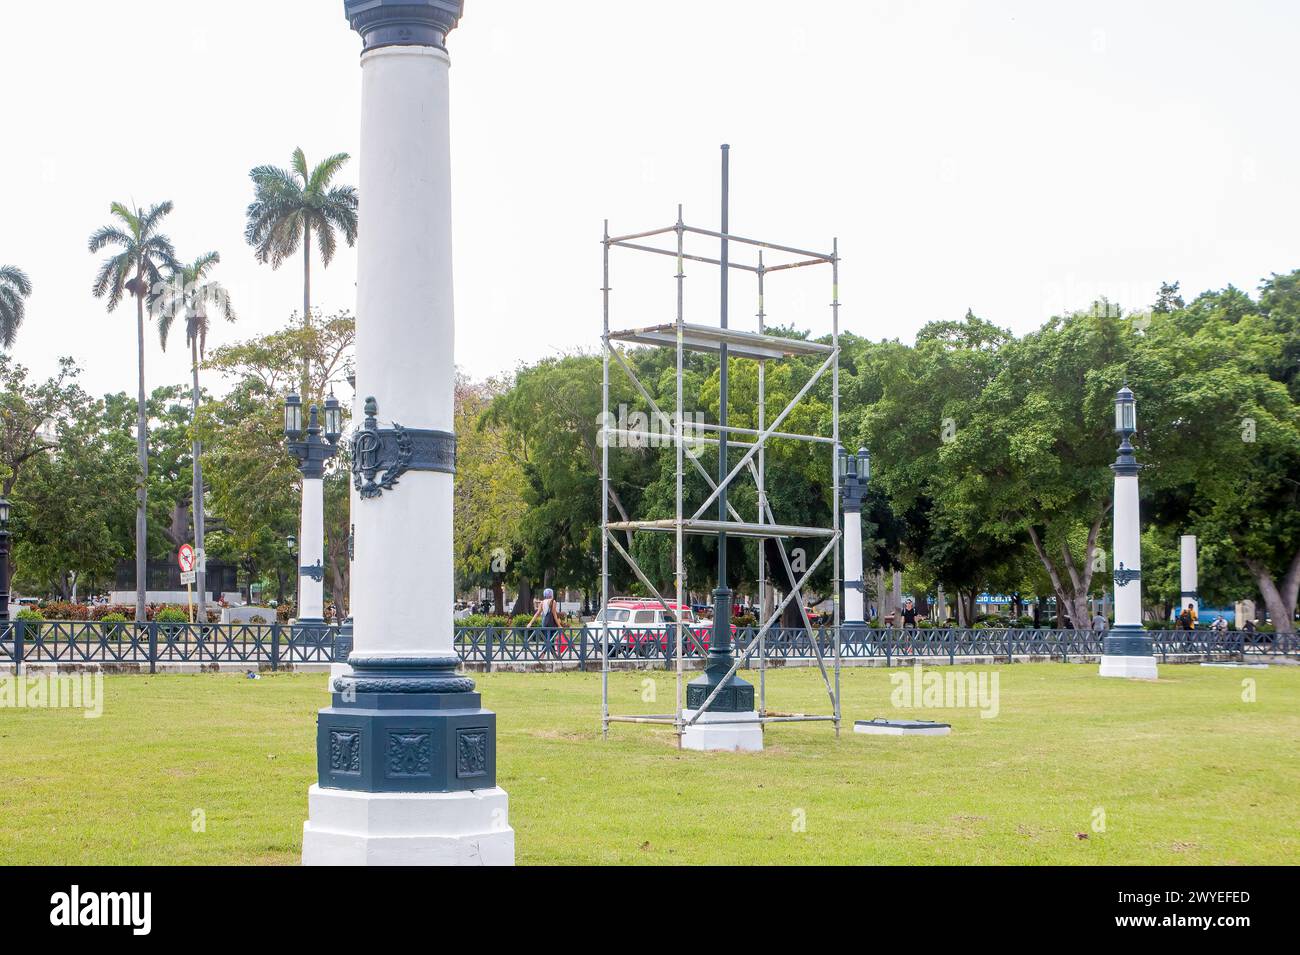 Scaffolding for repairing a square light pole in Havana, Cuba Stock Photo